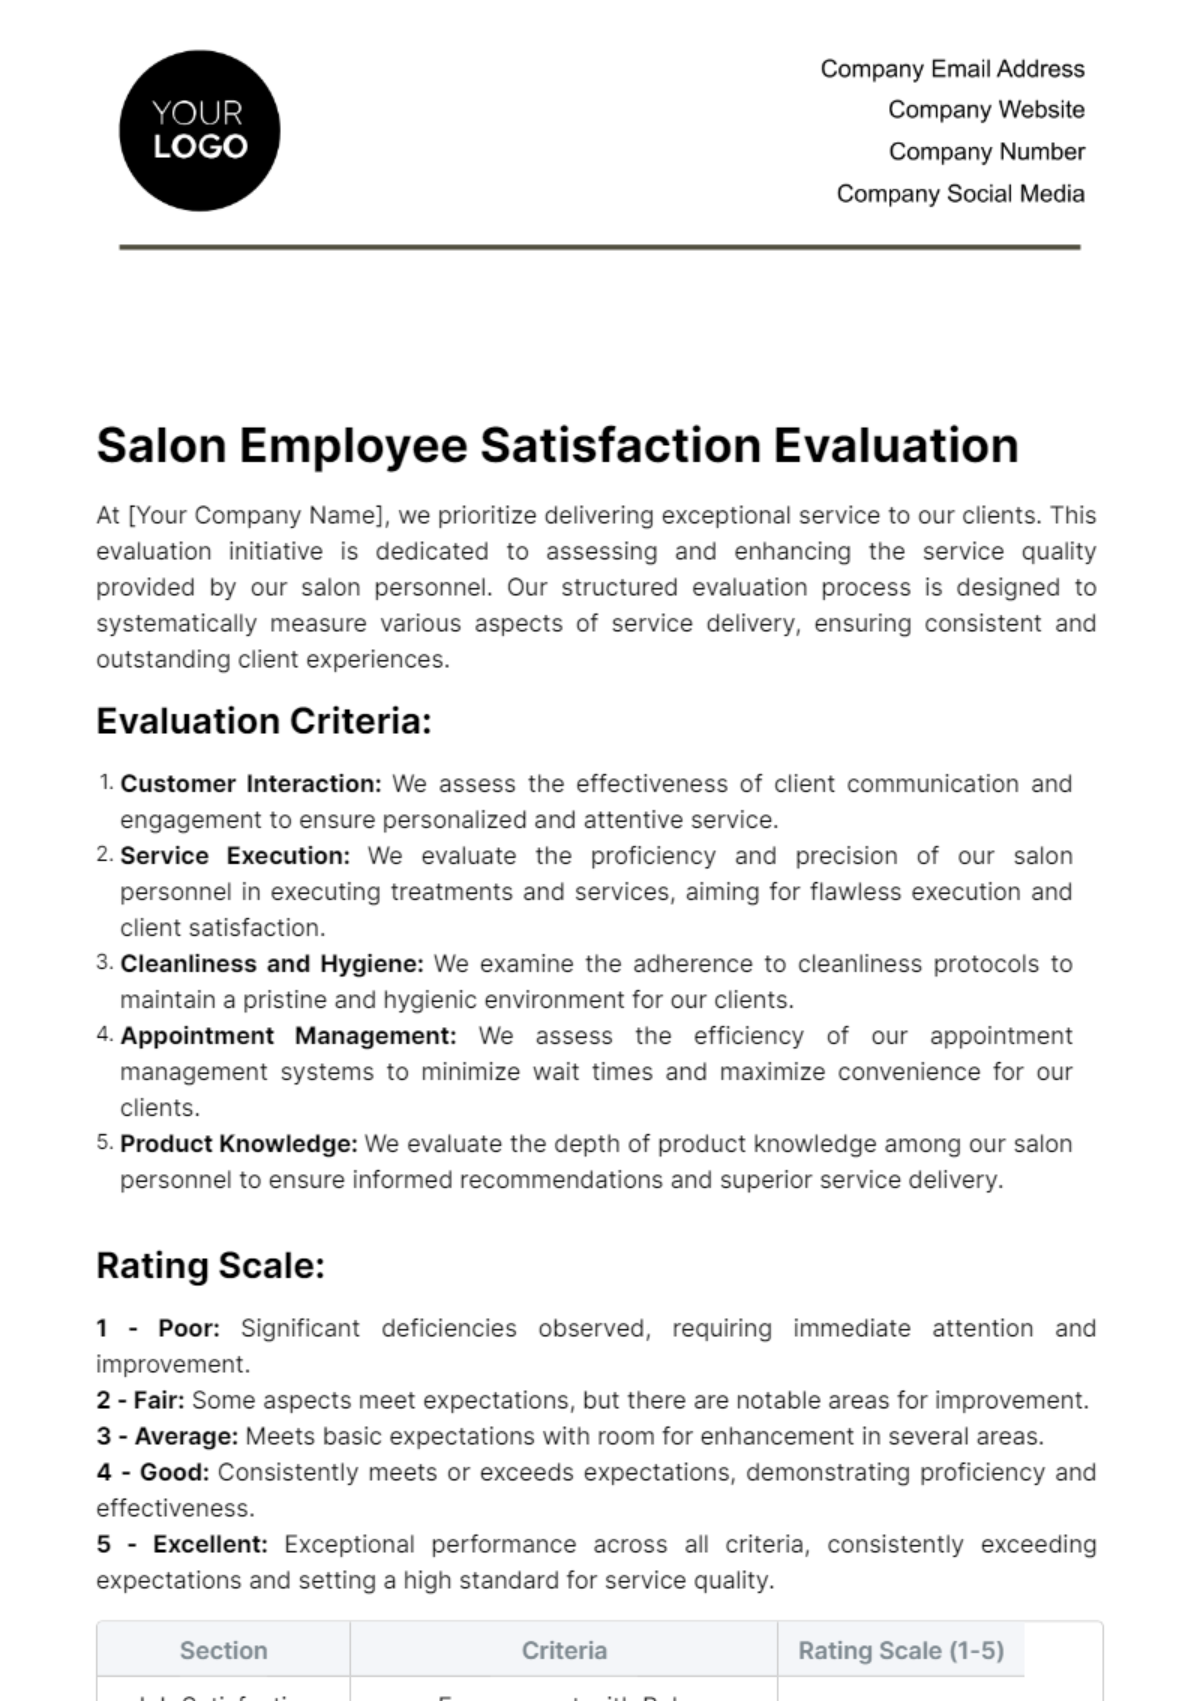 Free Salon Employee Satisfaction Evaluation Template